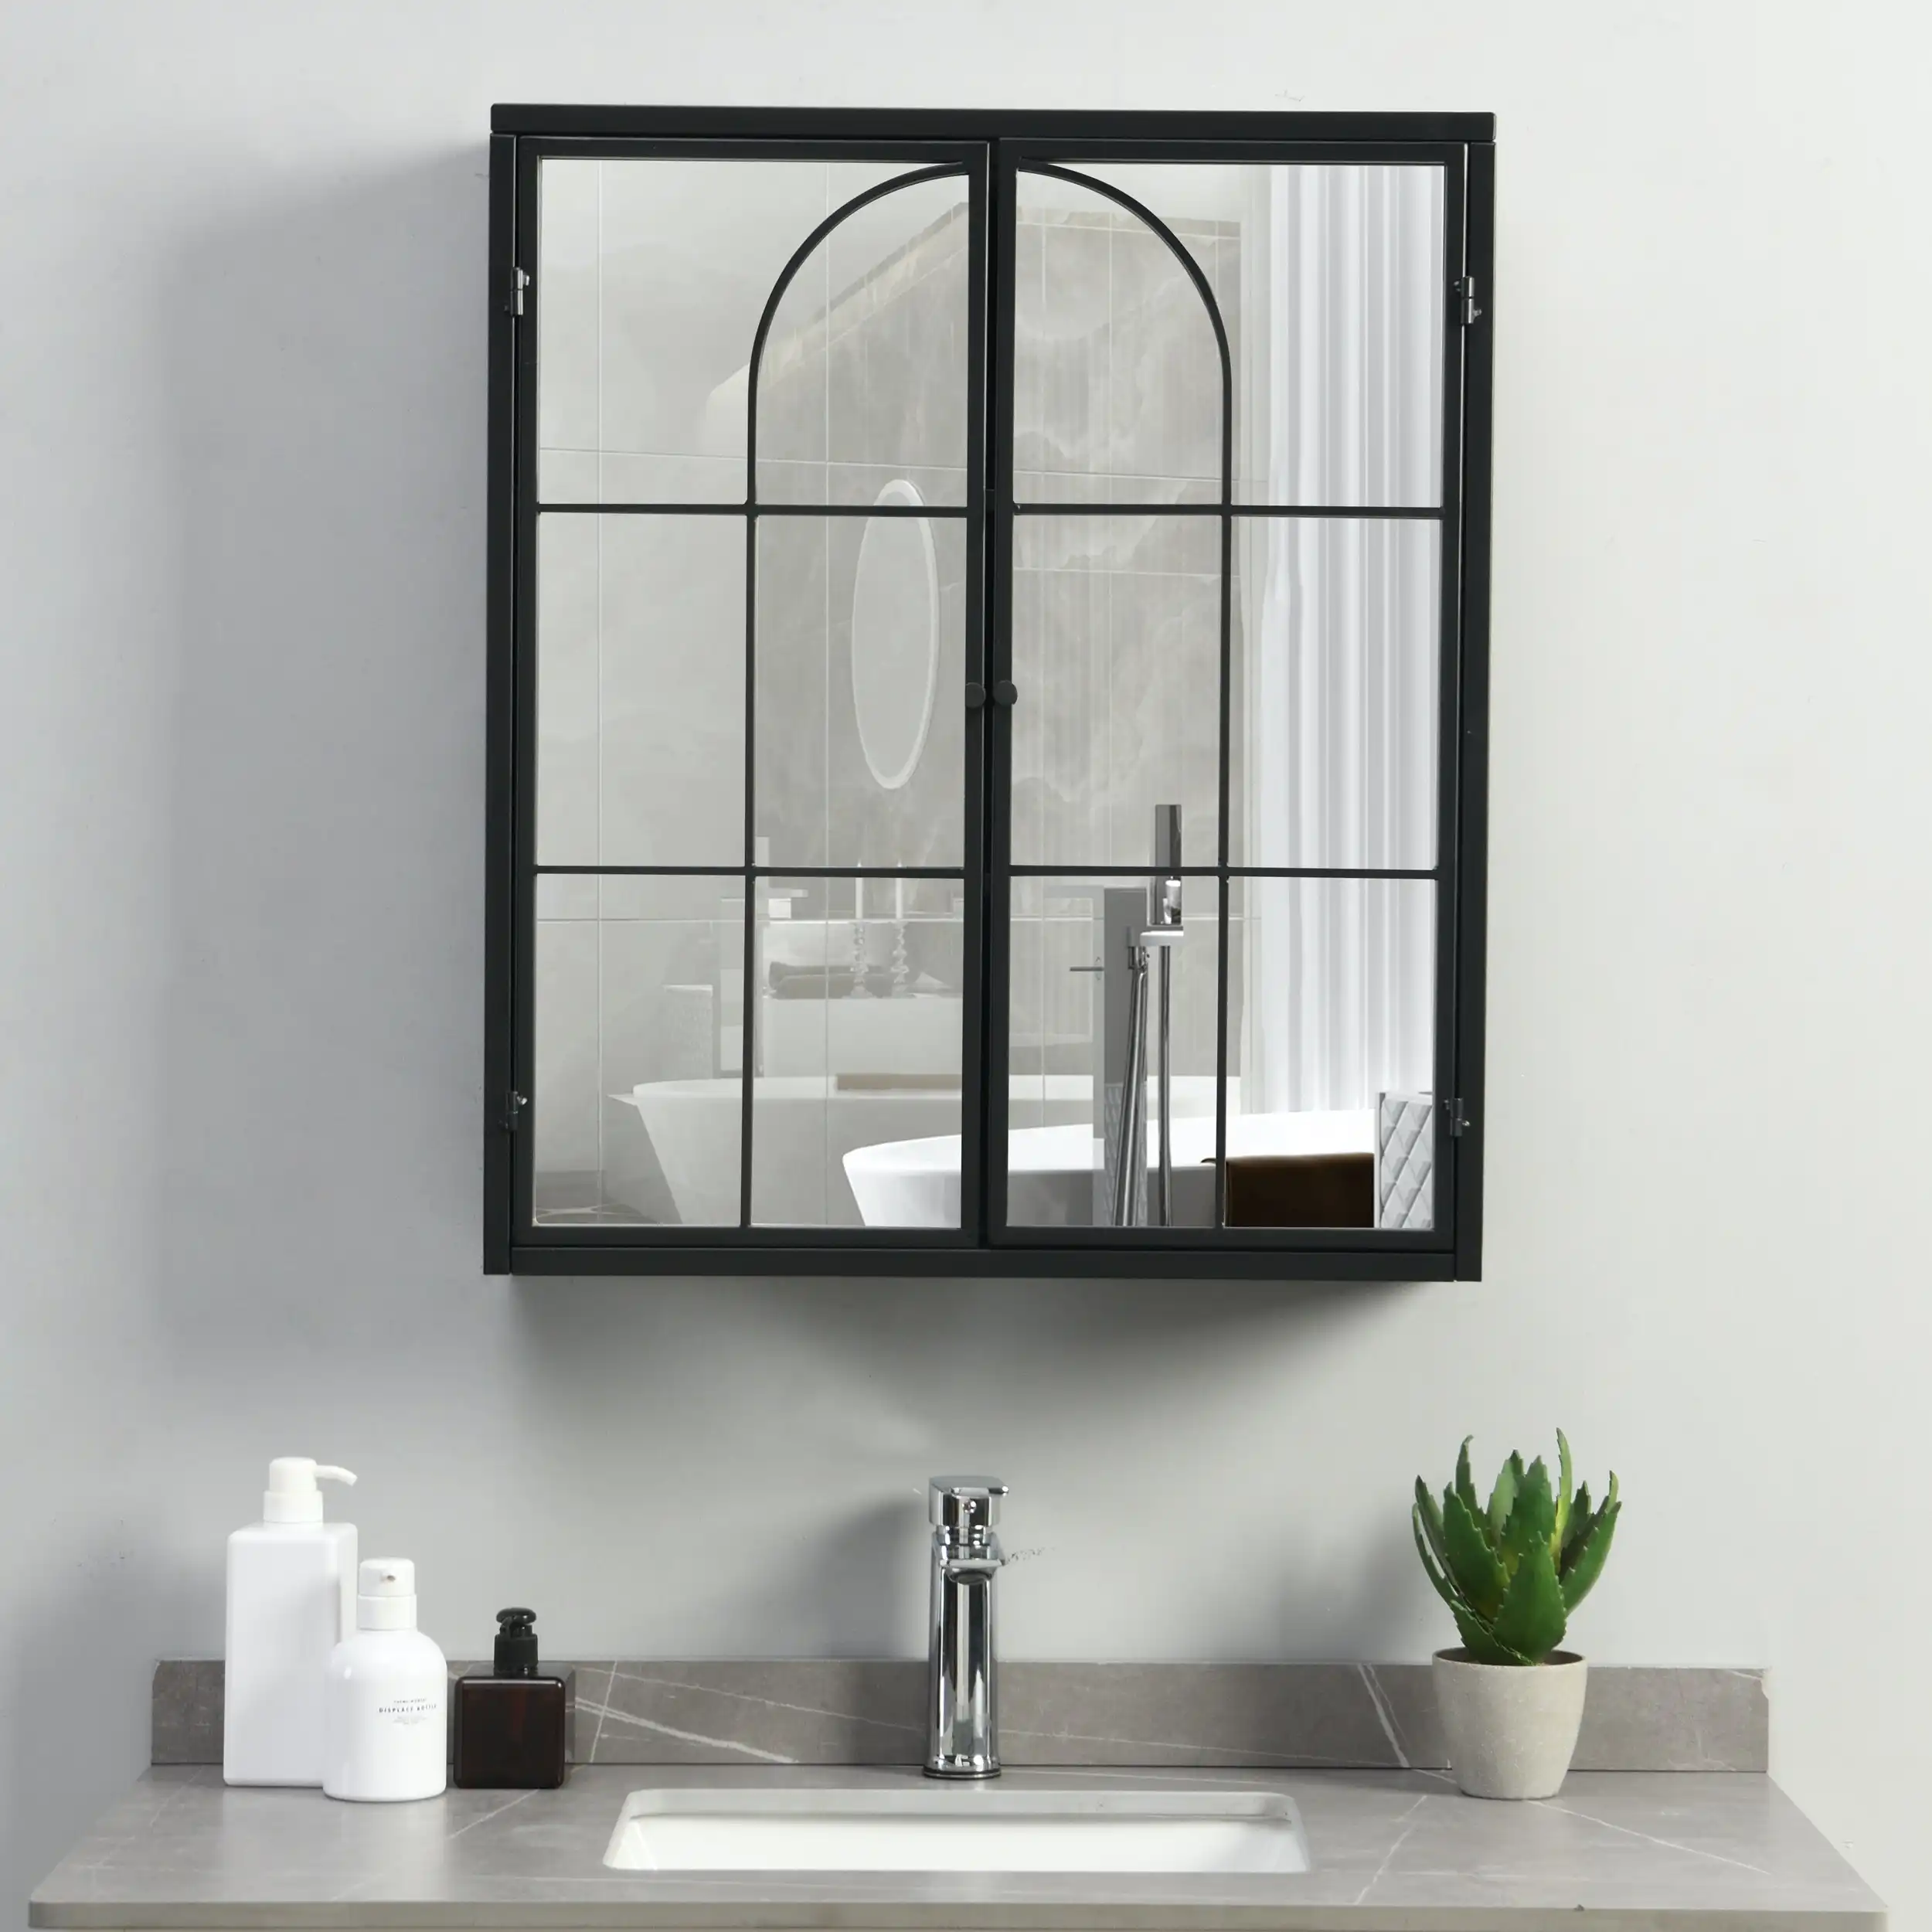 IHOMDEC Rectangle Metal Frame Wall Mounted Cabinet with Mirror Doors Black